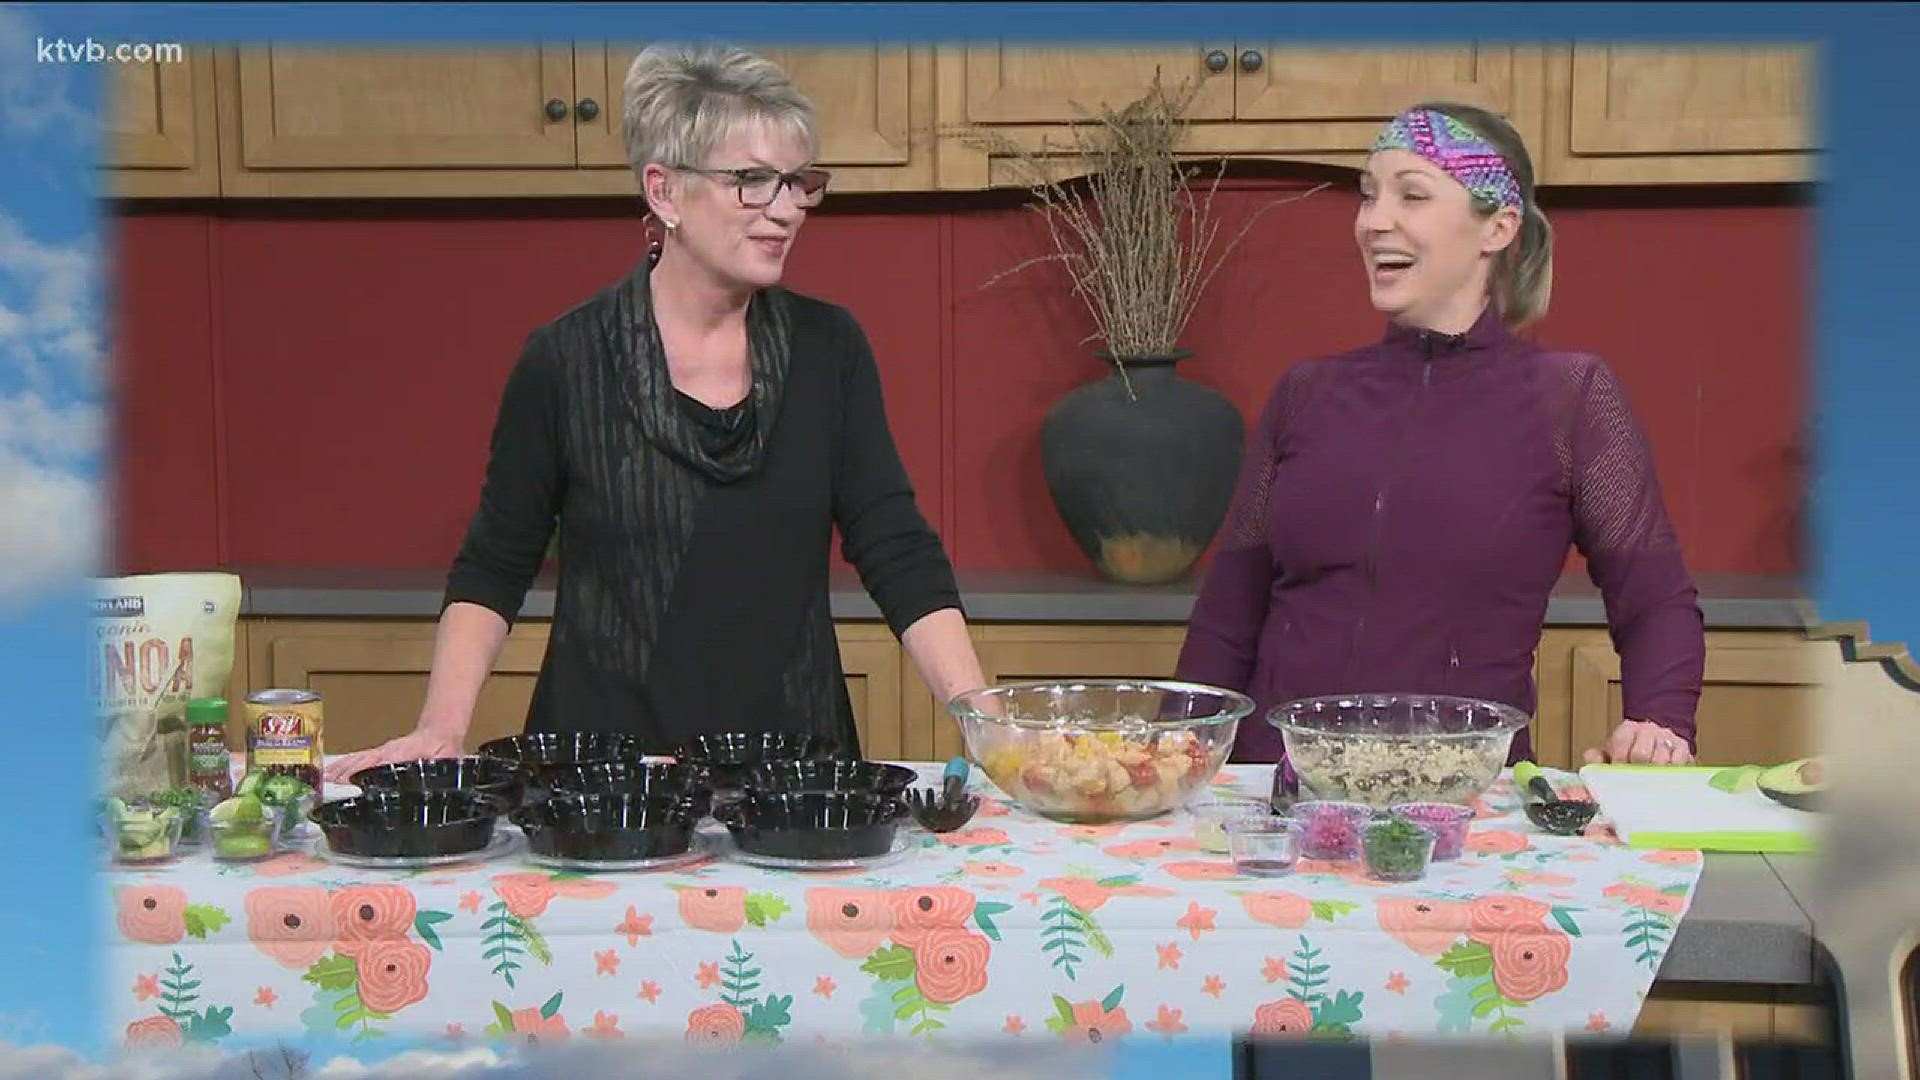 Health and wellness coach Katie Hug shows us her Southwest chicken quinoa salad recipe.